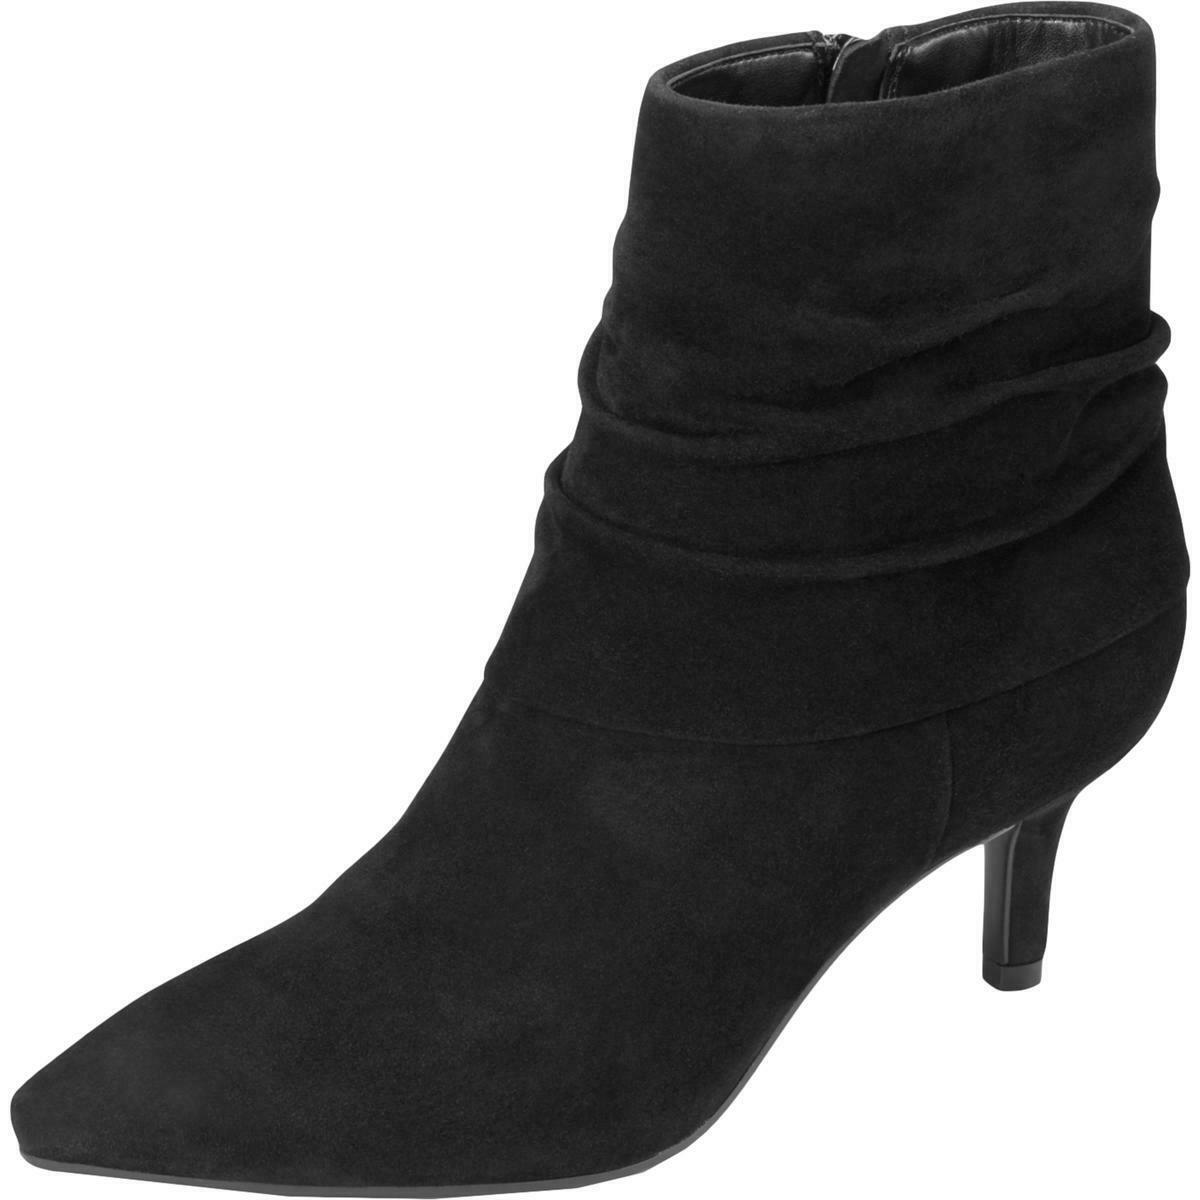 Aerosoles Womens Ramble On Black Suede Booties Shoes 6 Medium (B,M) BHFO 6279